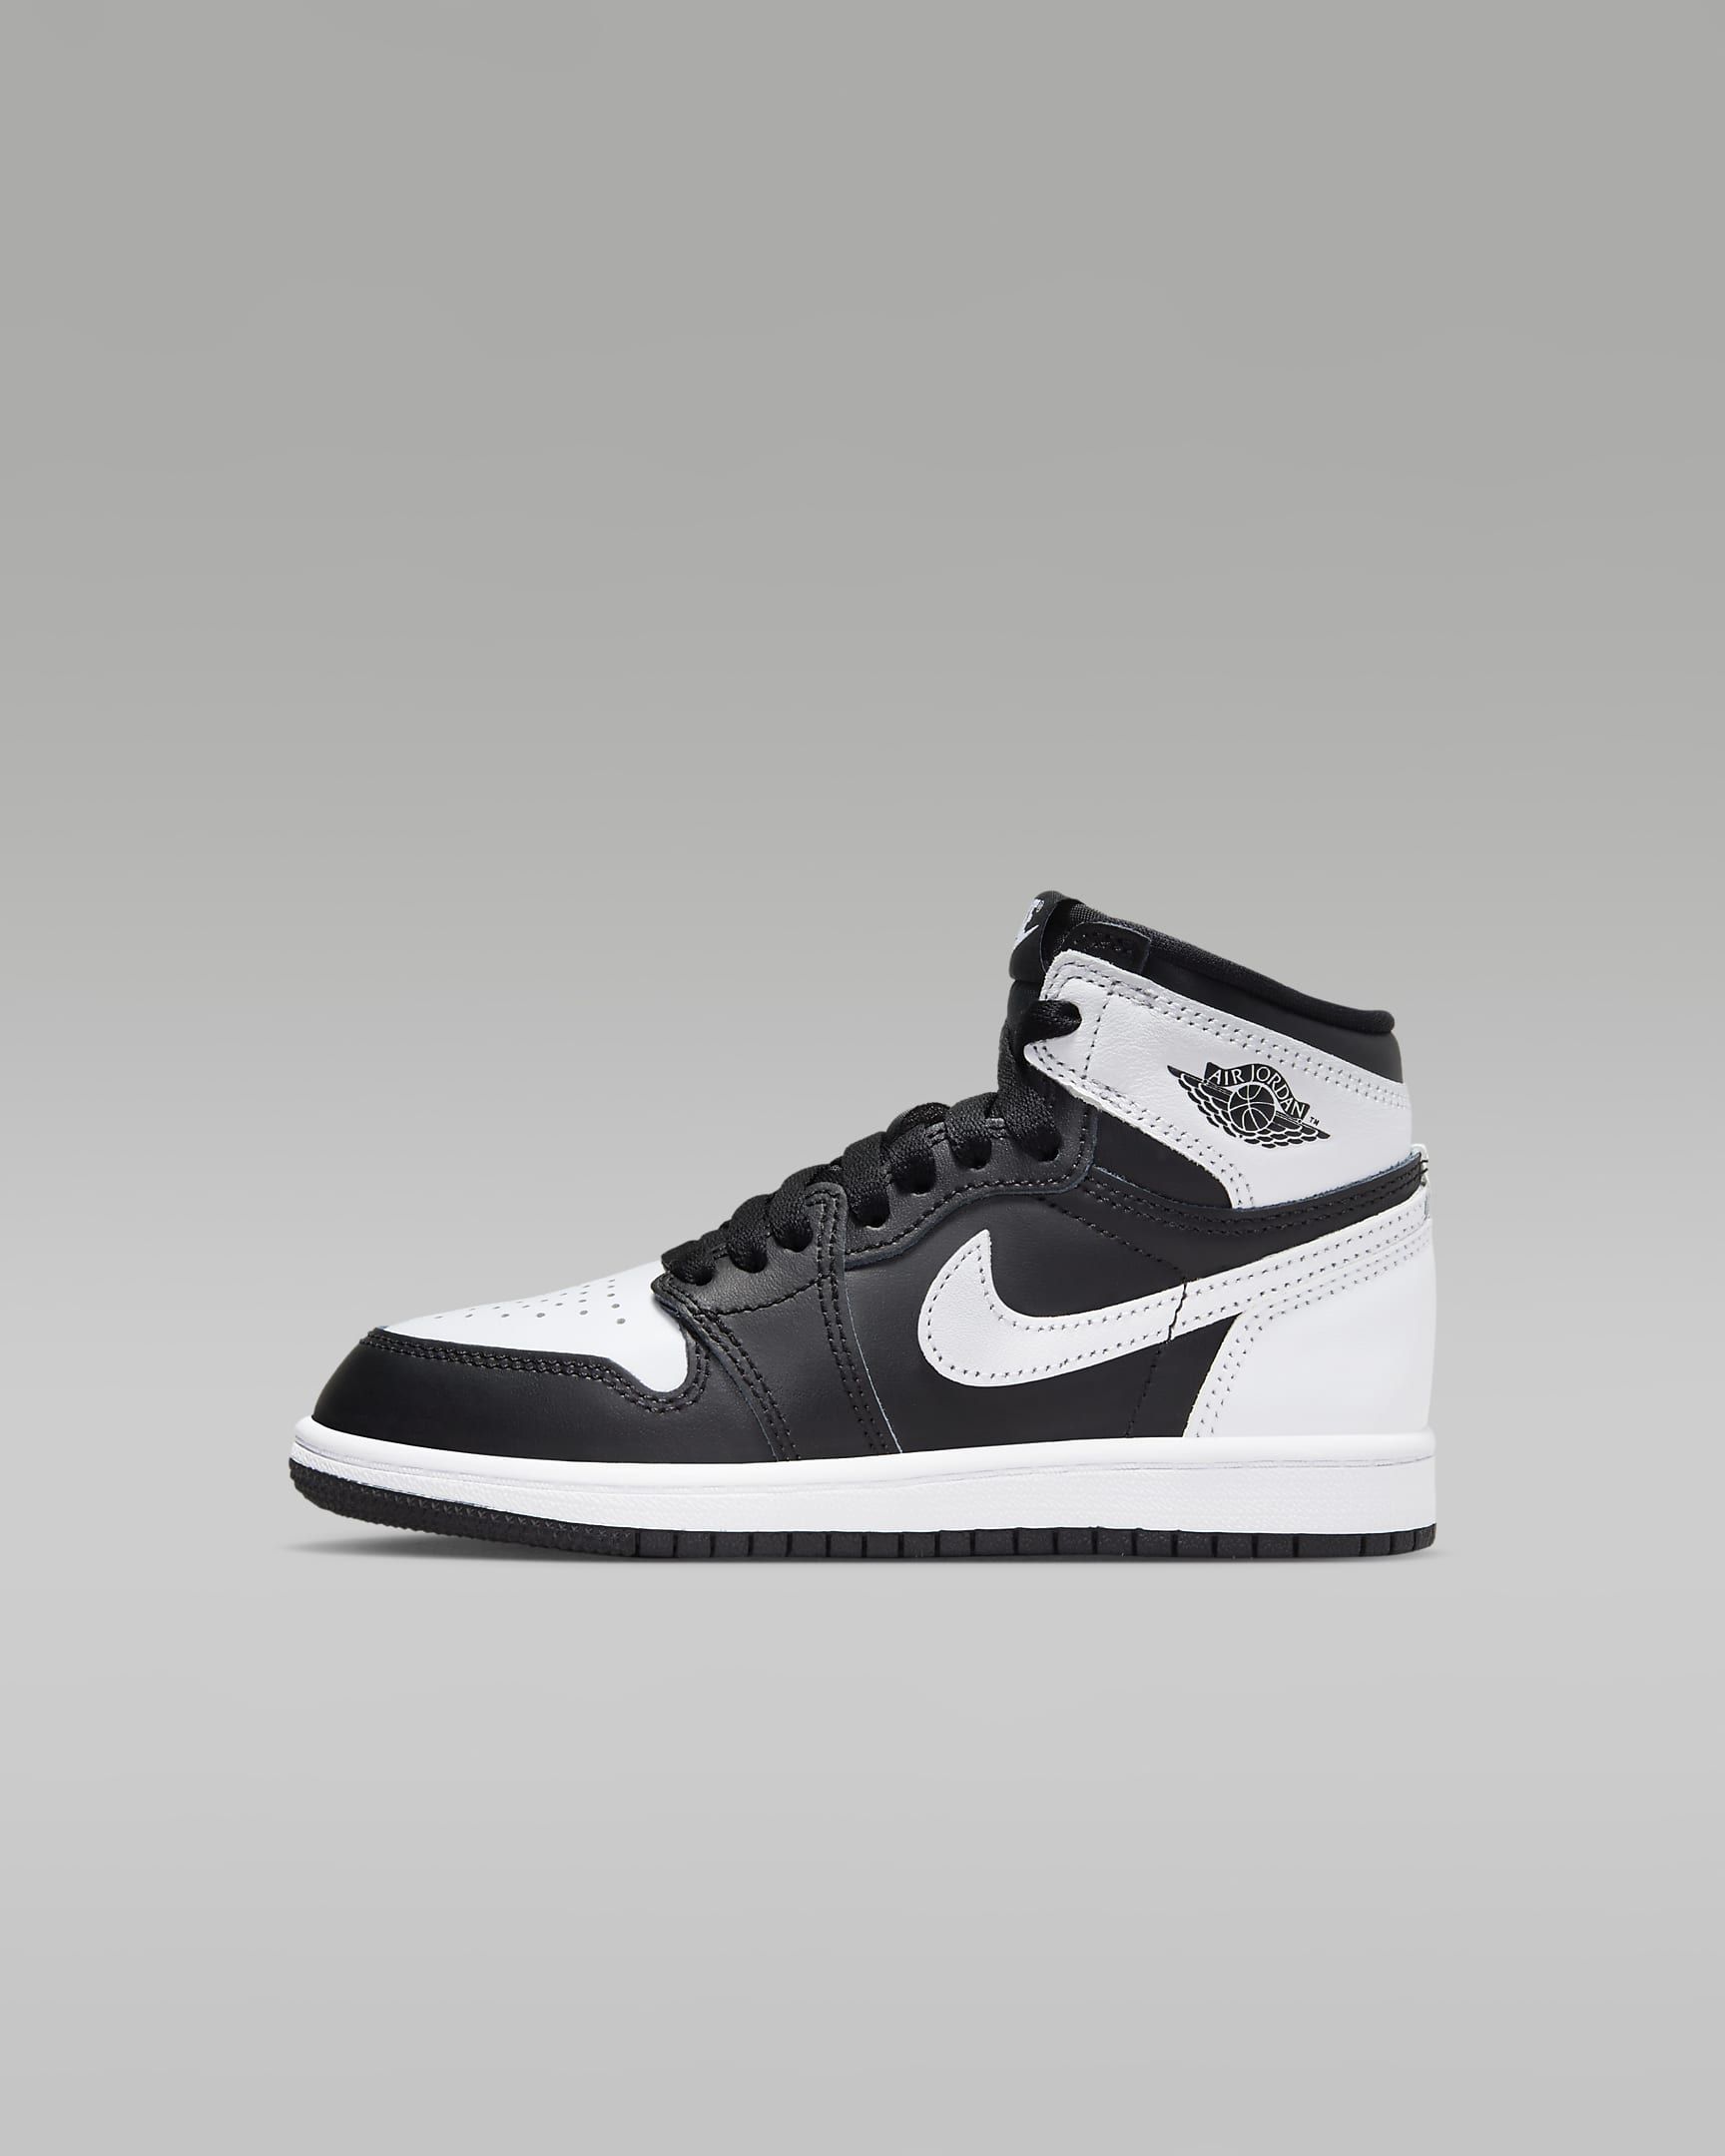 Jordan 1 Retro High OG "Black & White" Little Kids' Shoes. Nike.com | Nike (US)